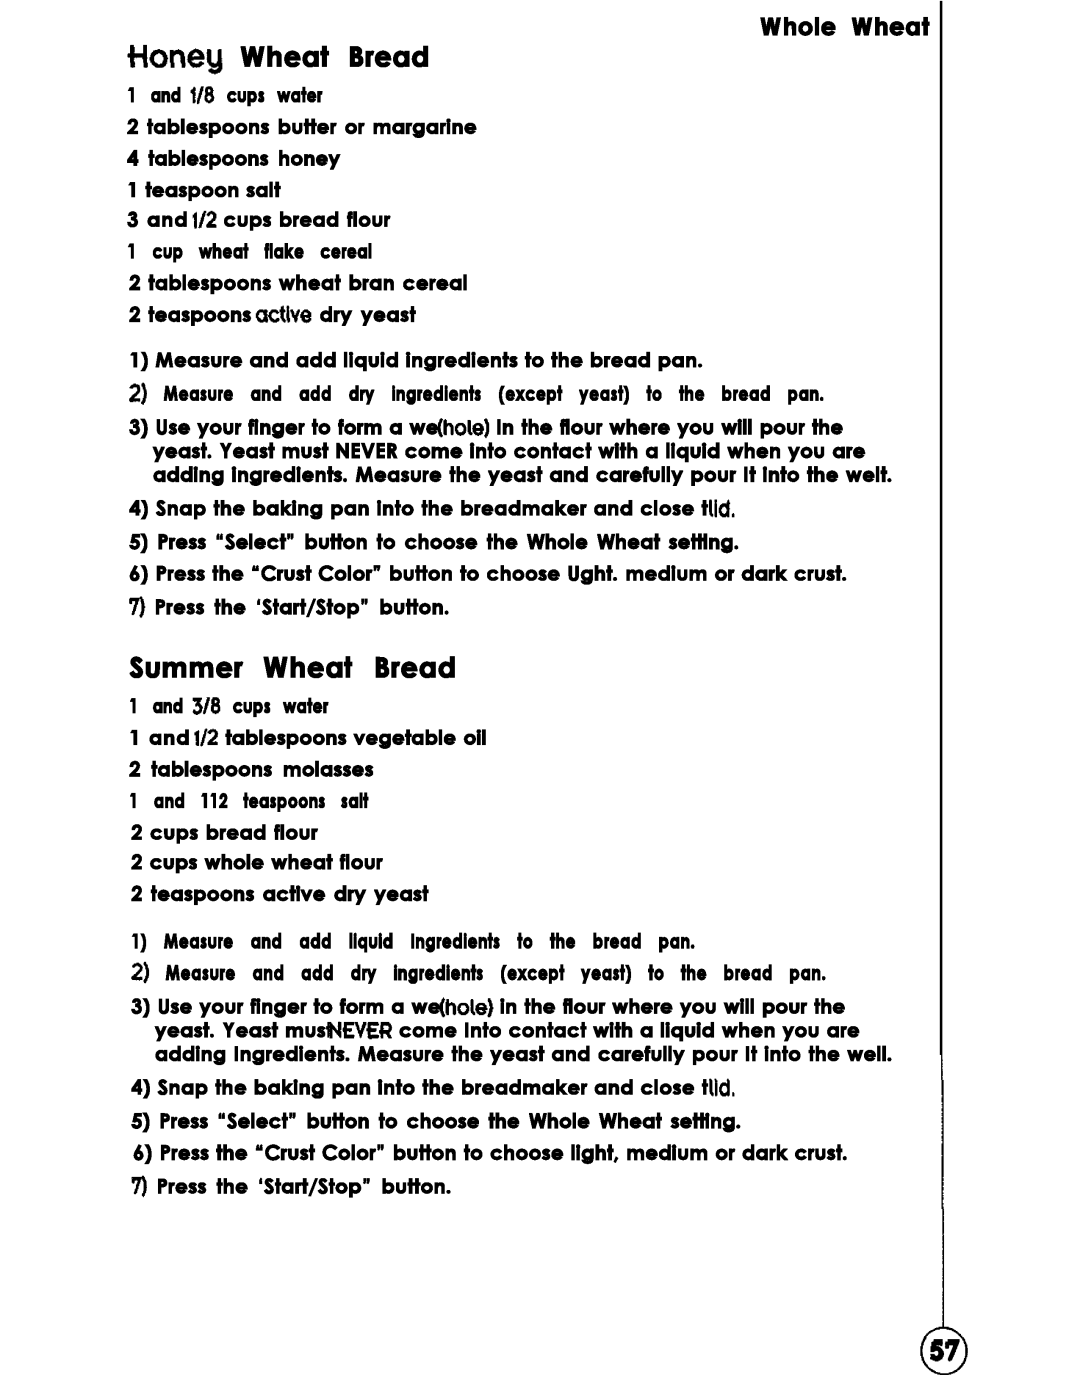 Oster Bread Maker user manual Summer Wheat Bread, Whole Wheat 